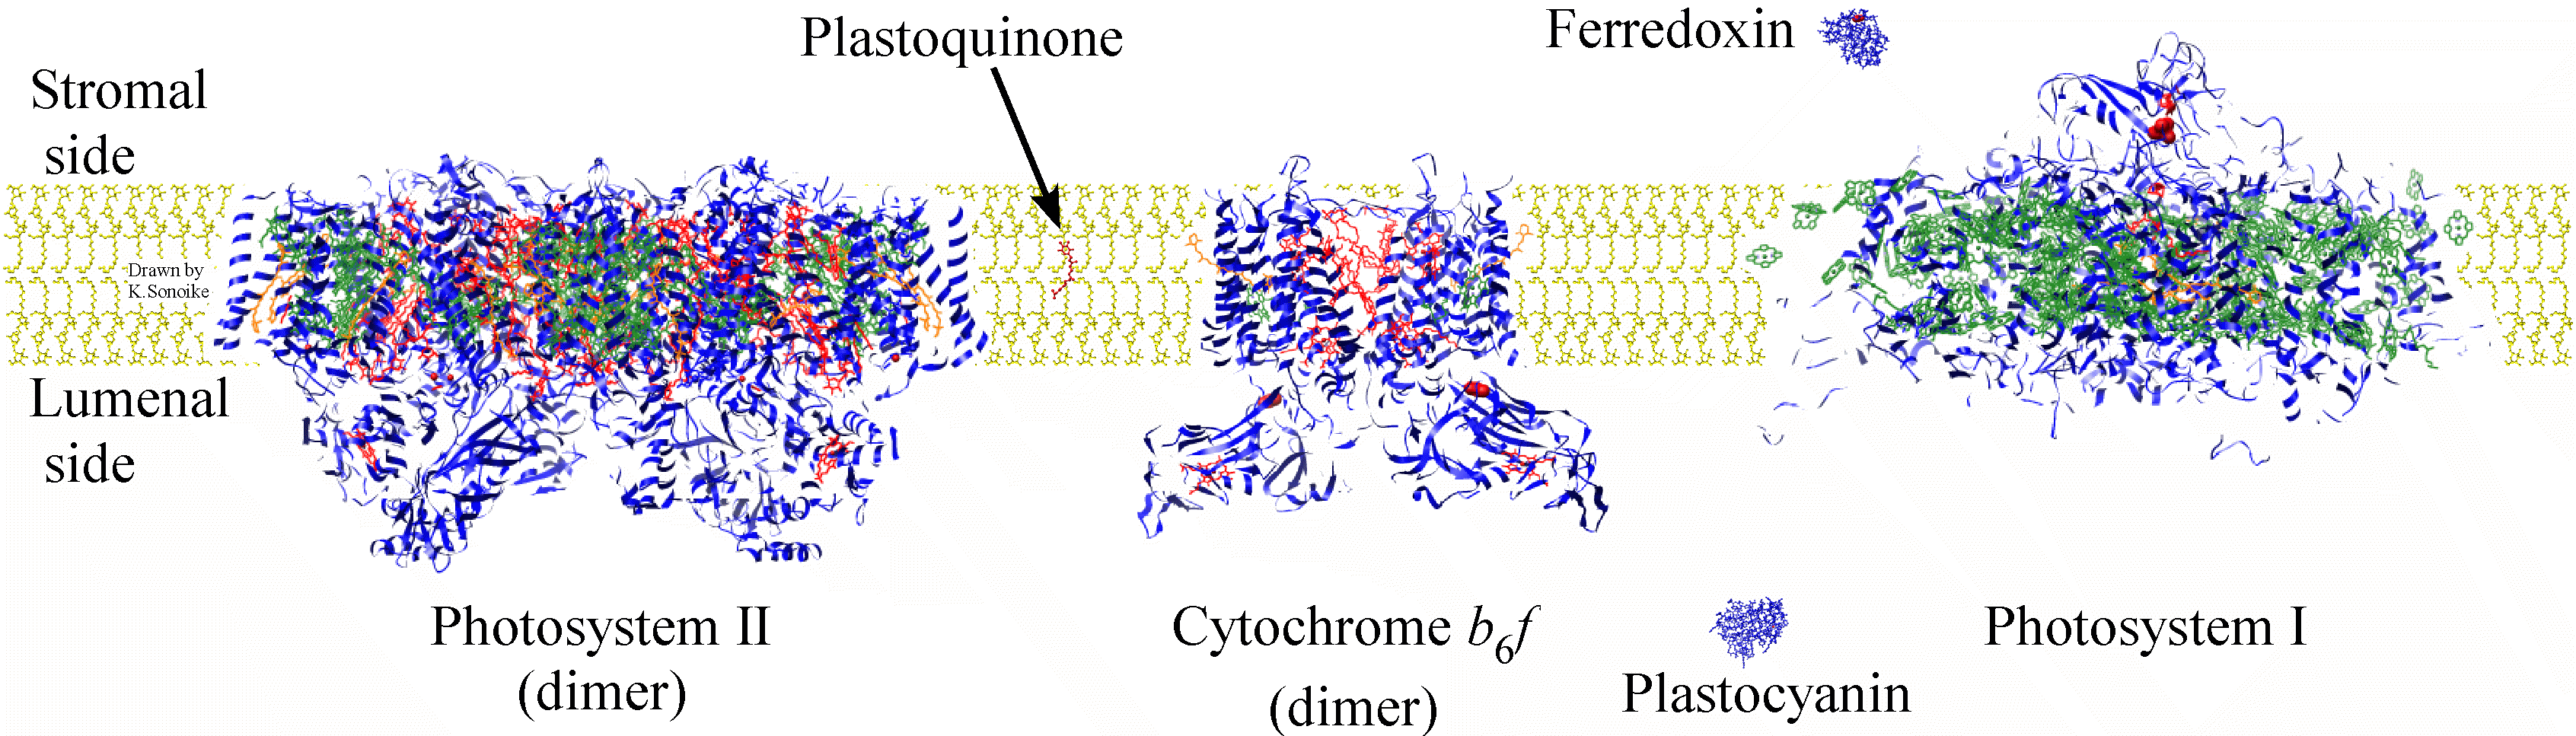 Photosynthetic Machinery in Thylakoid membranes